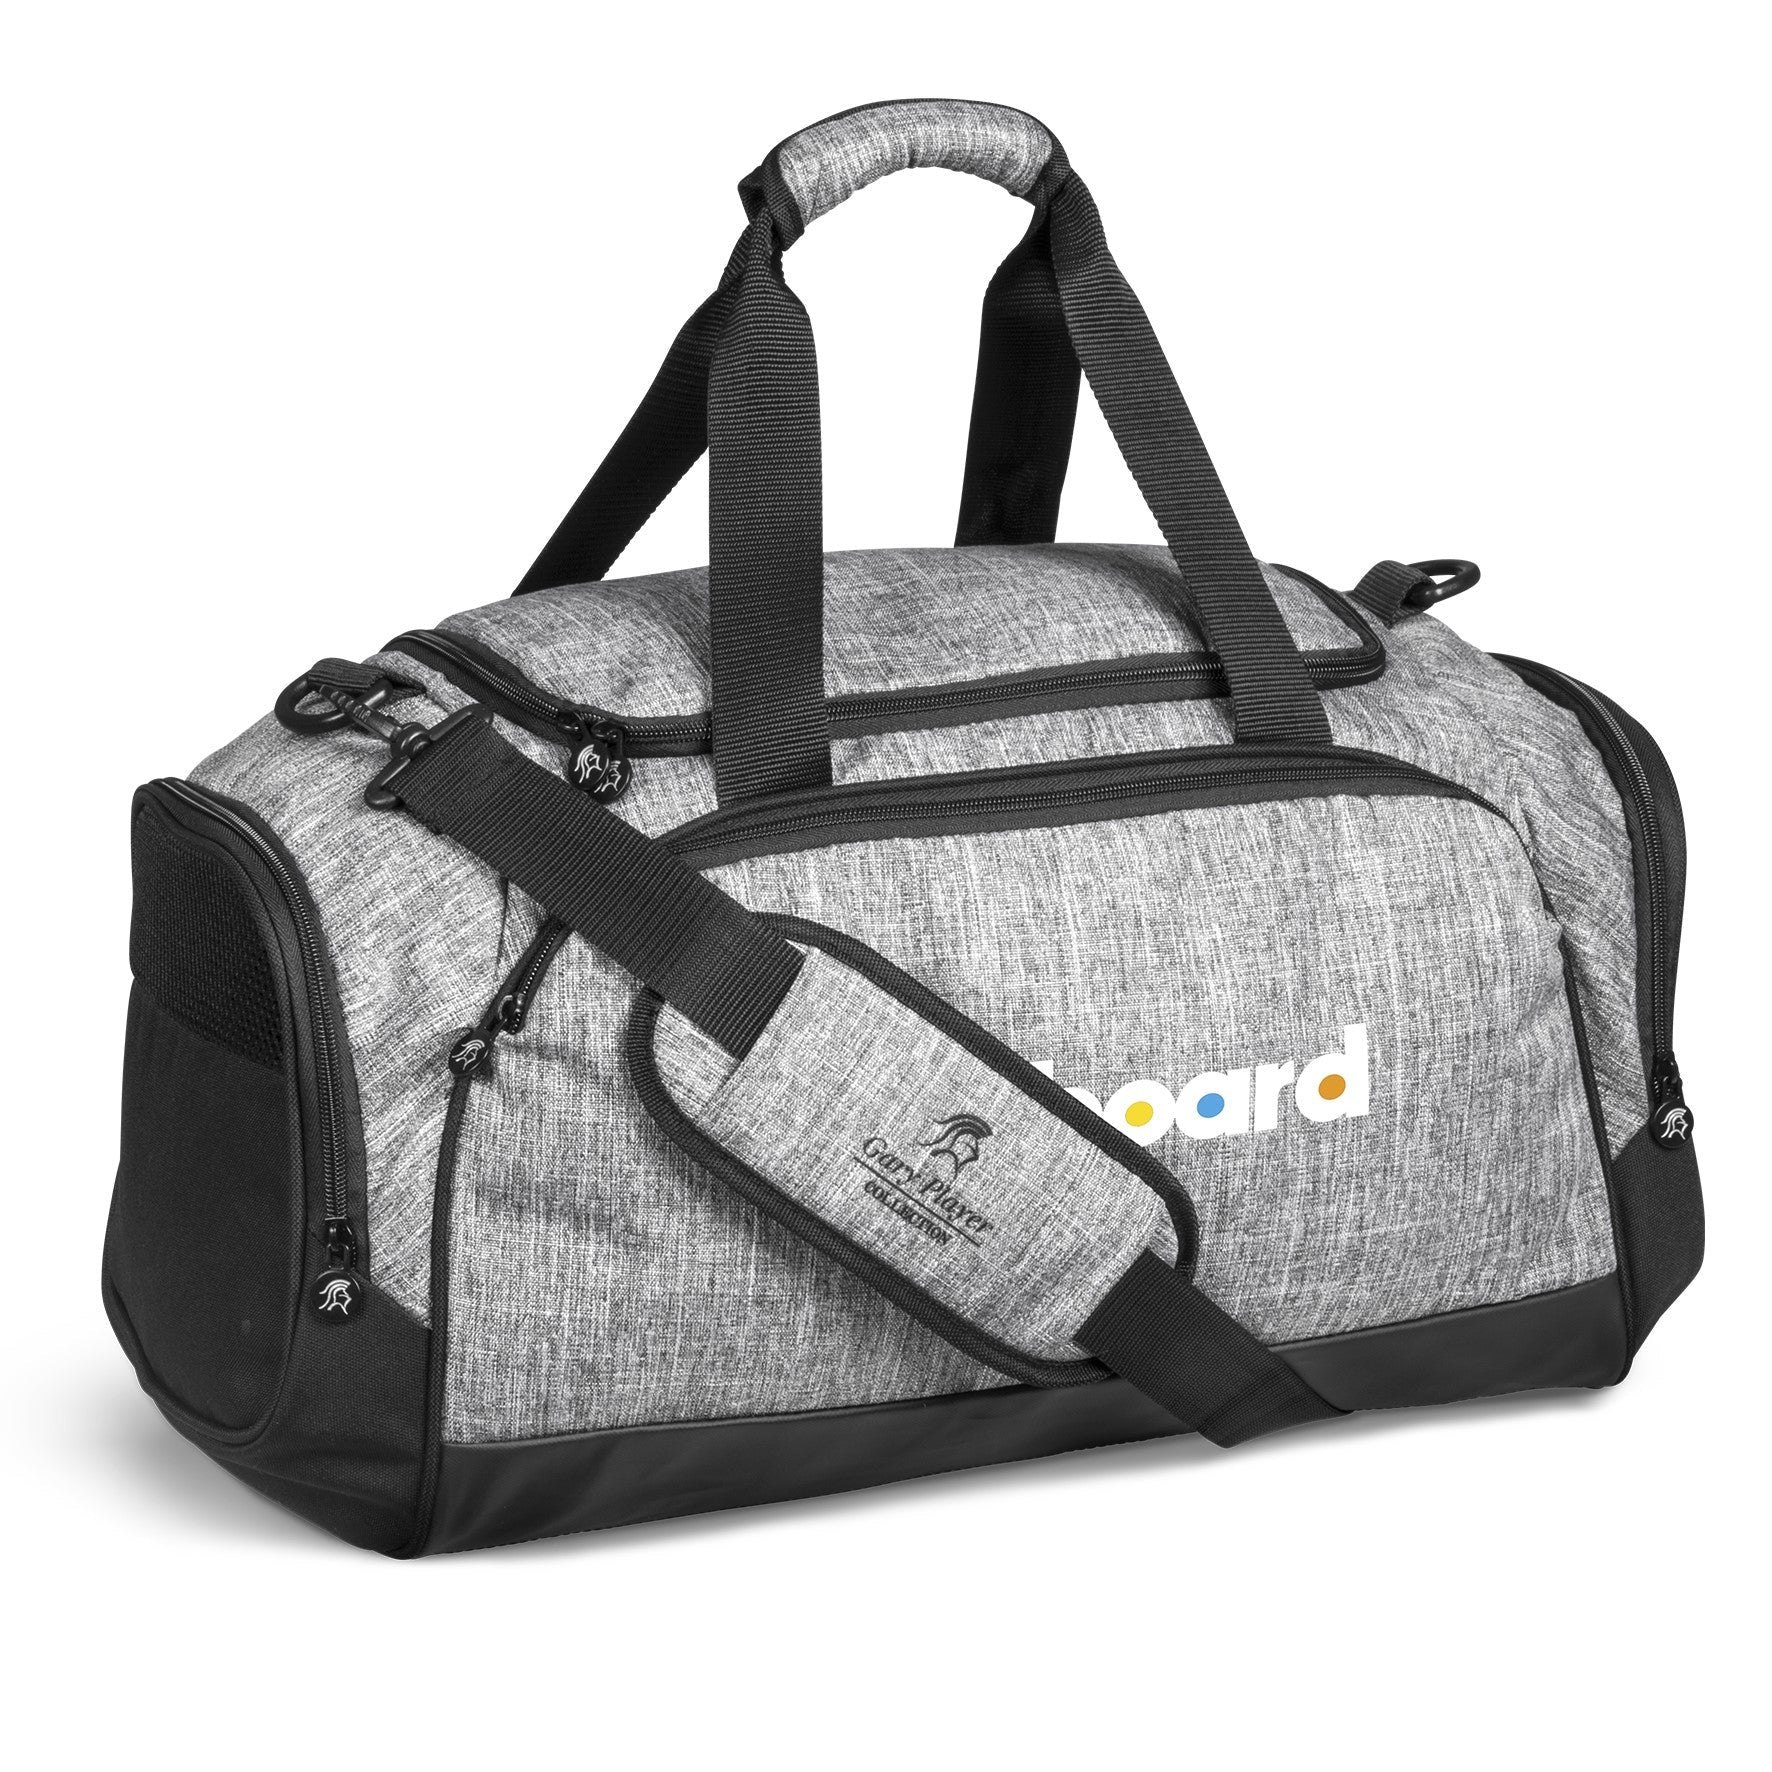 Branded grey duffel bag